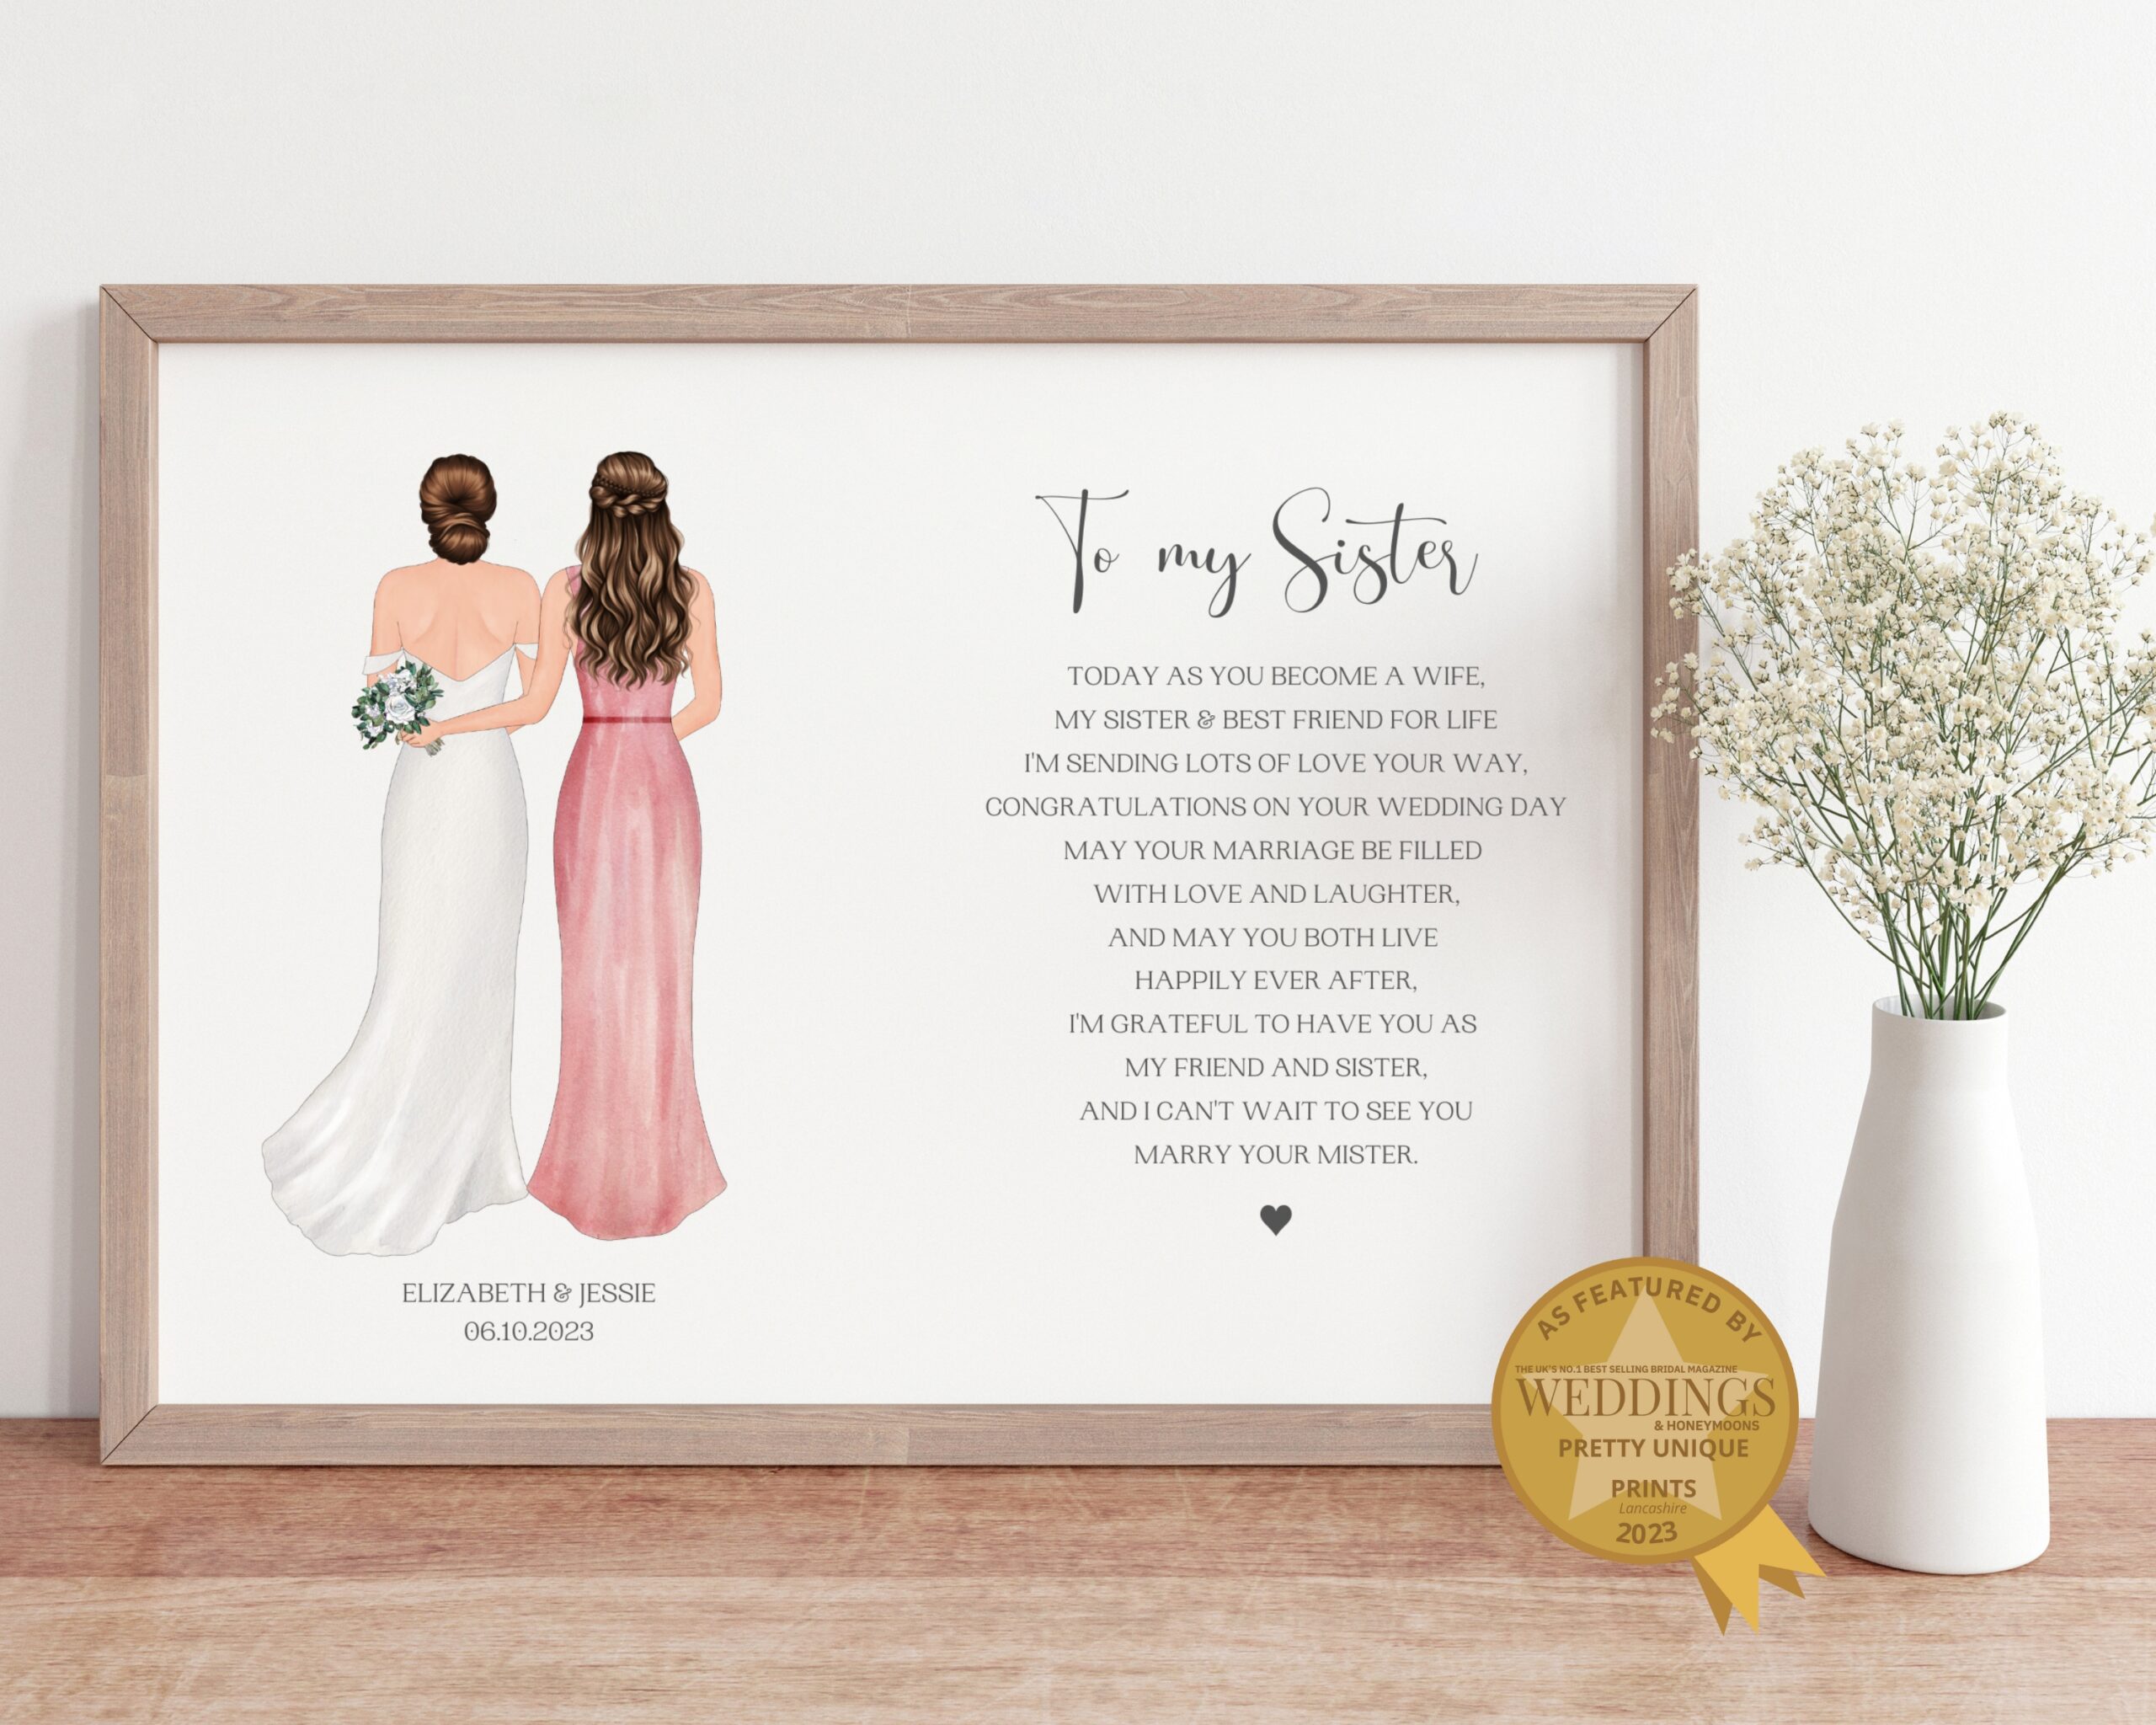 Top 1 Designer Wedding Clutch For Her - Best Gift Ideas For Her |  Everlasting Memories